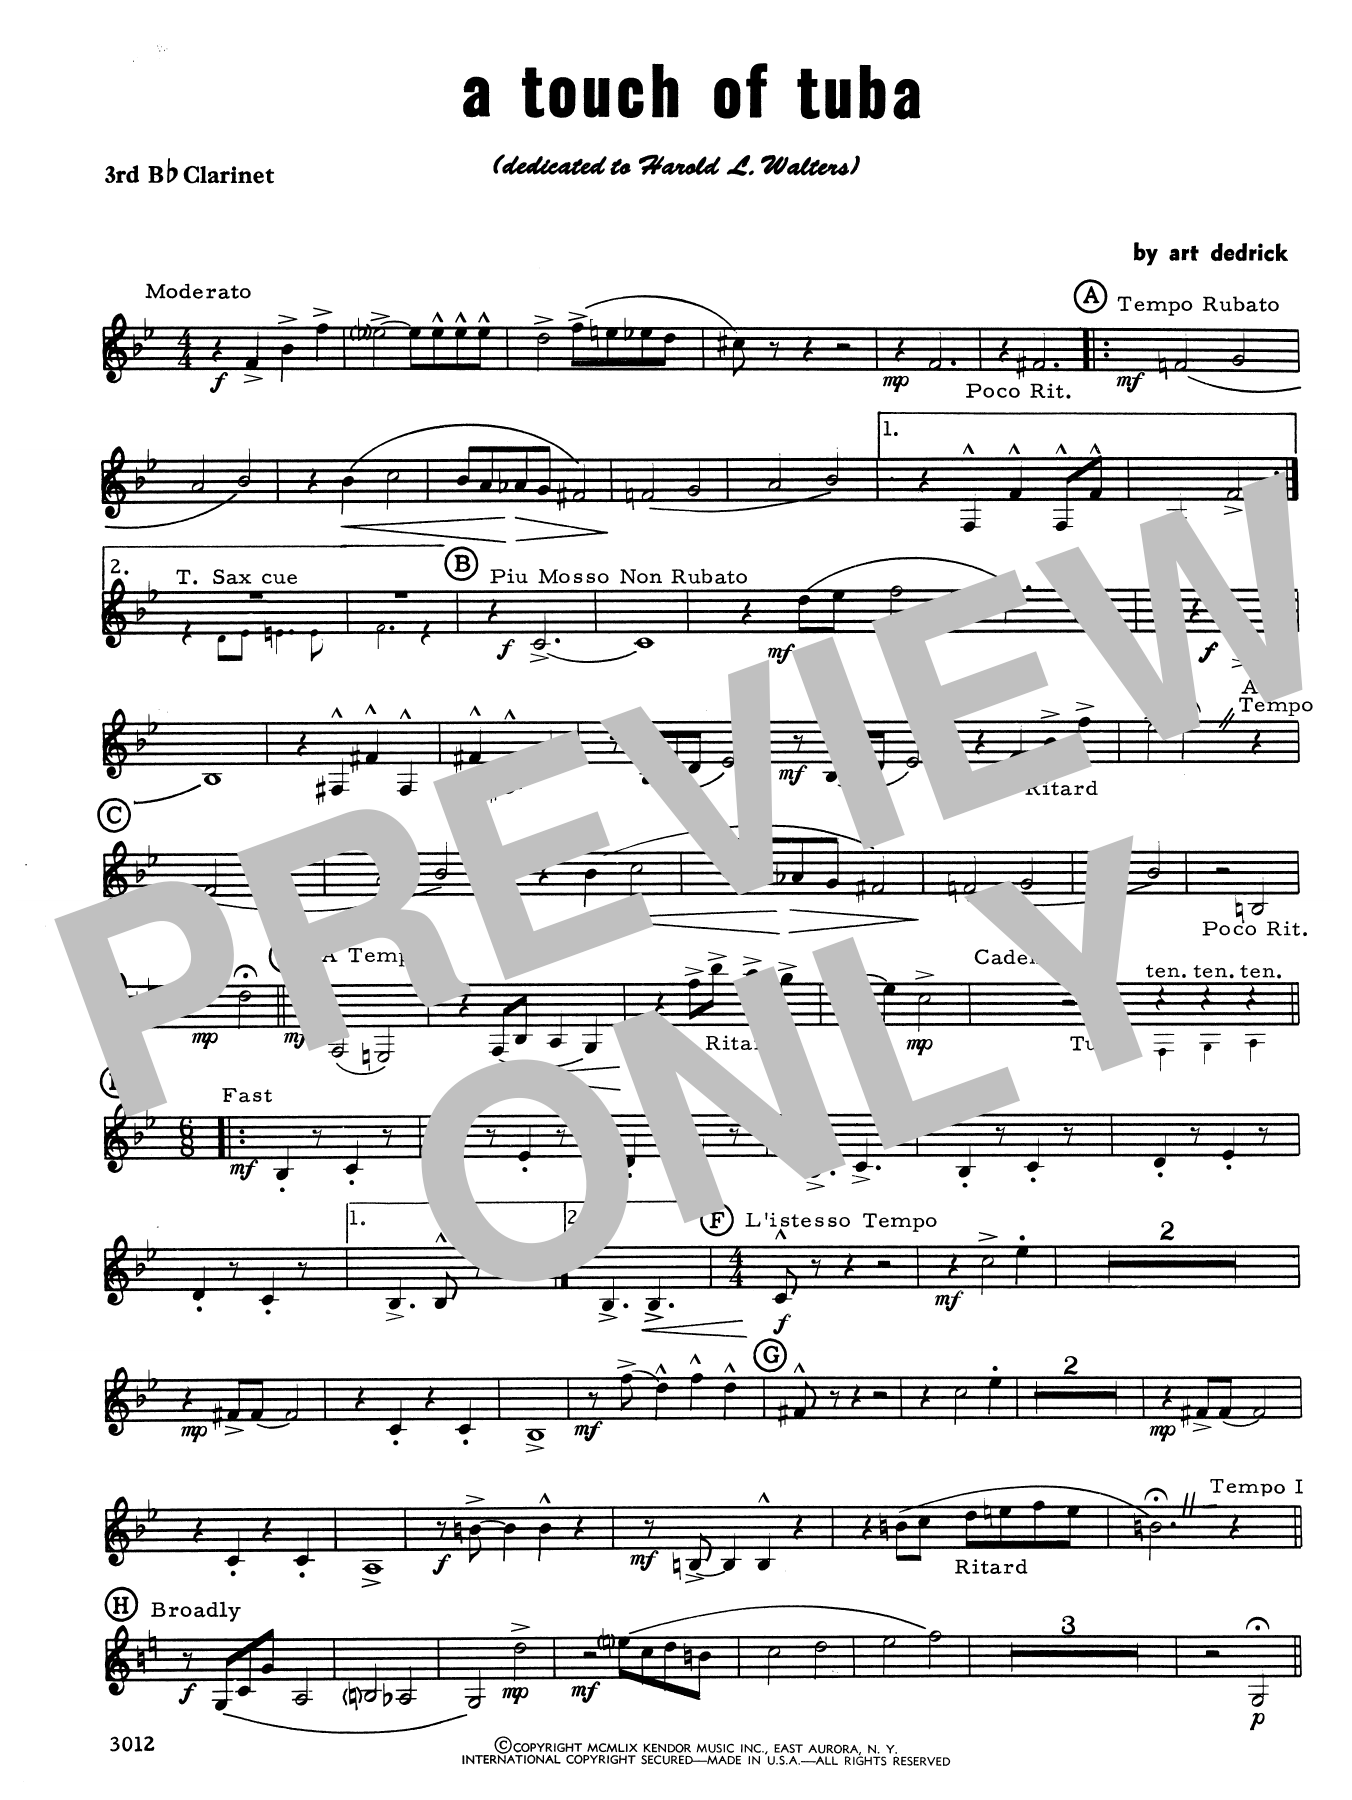 Download Art Dedrick A Touch Of Tuba - 3rd Bb Clarinet Sheet Music